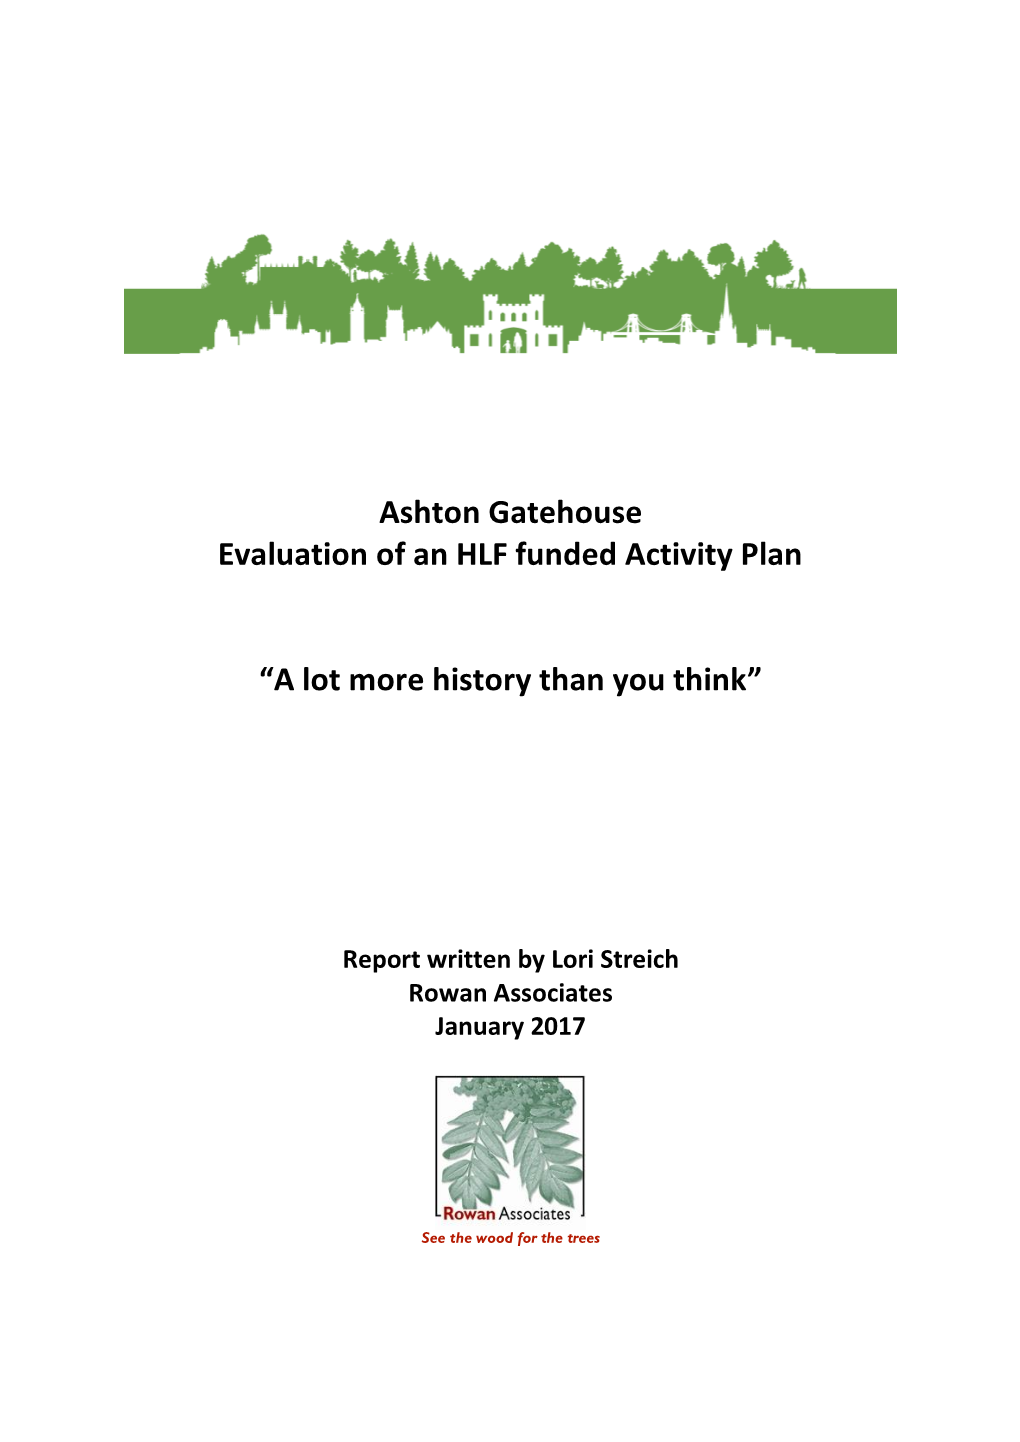 Ashton Gatehouse Evaluation of an HLF Funded Activity Plan